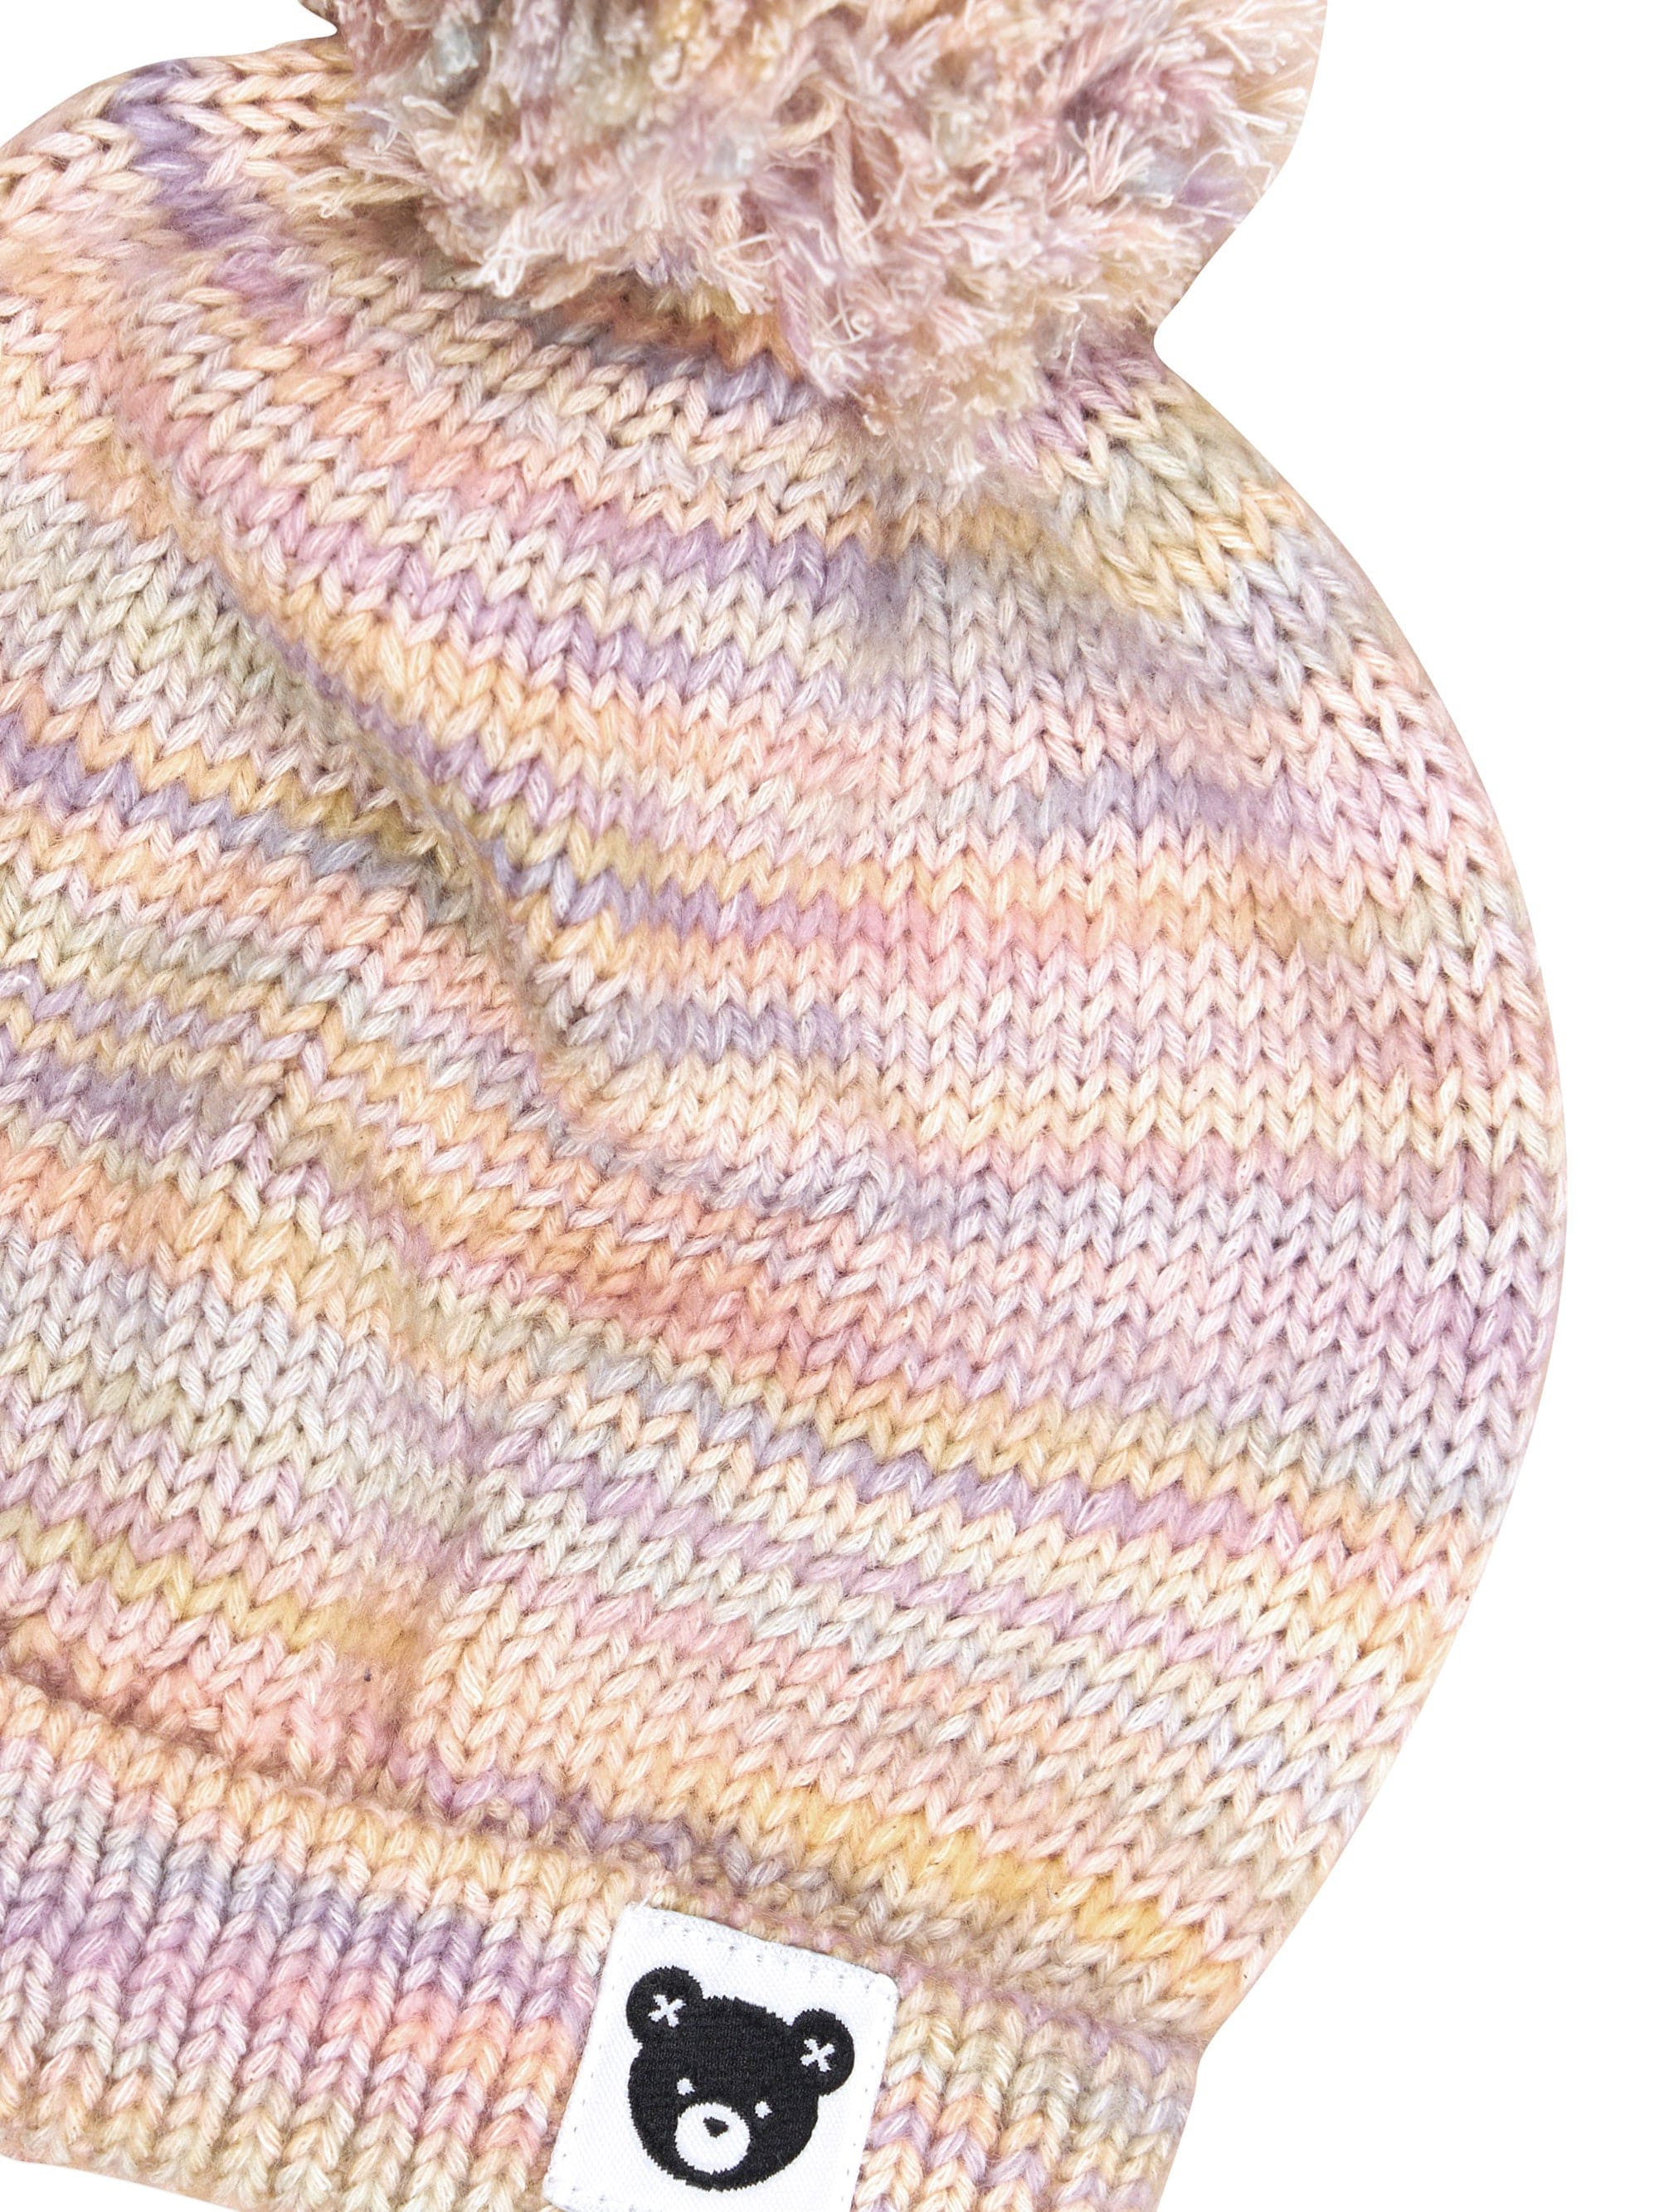 Huxbaby Accessories Hats Rainbow Knit Beanie